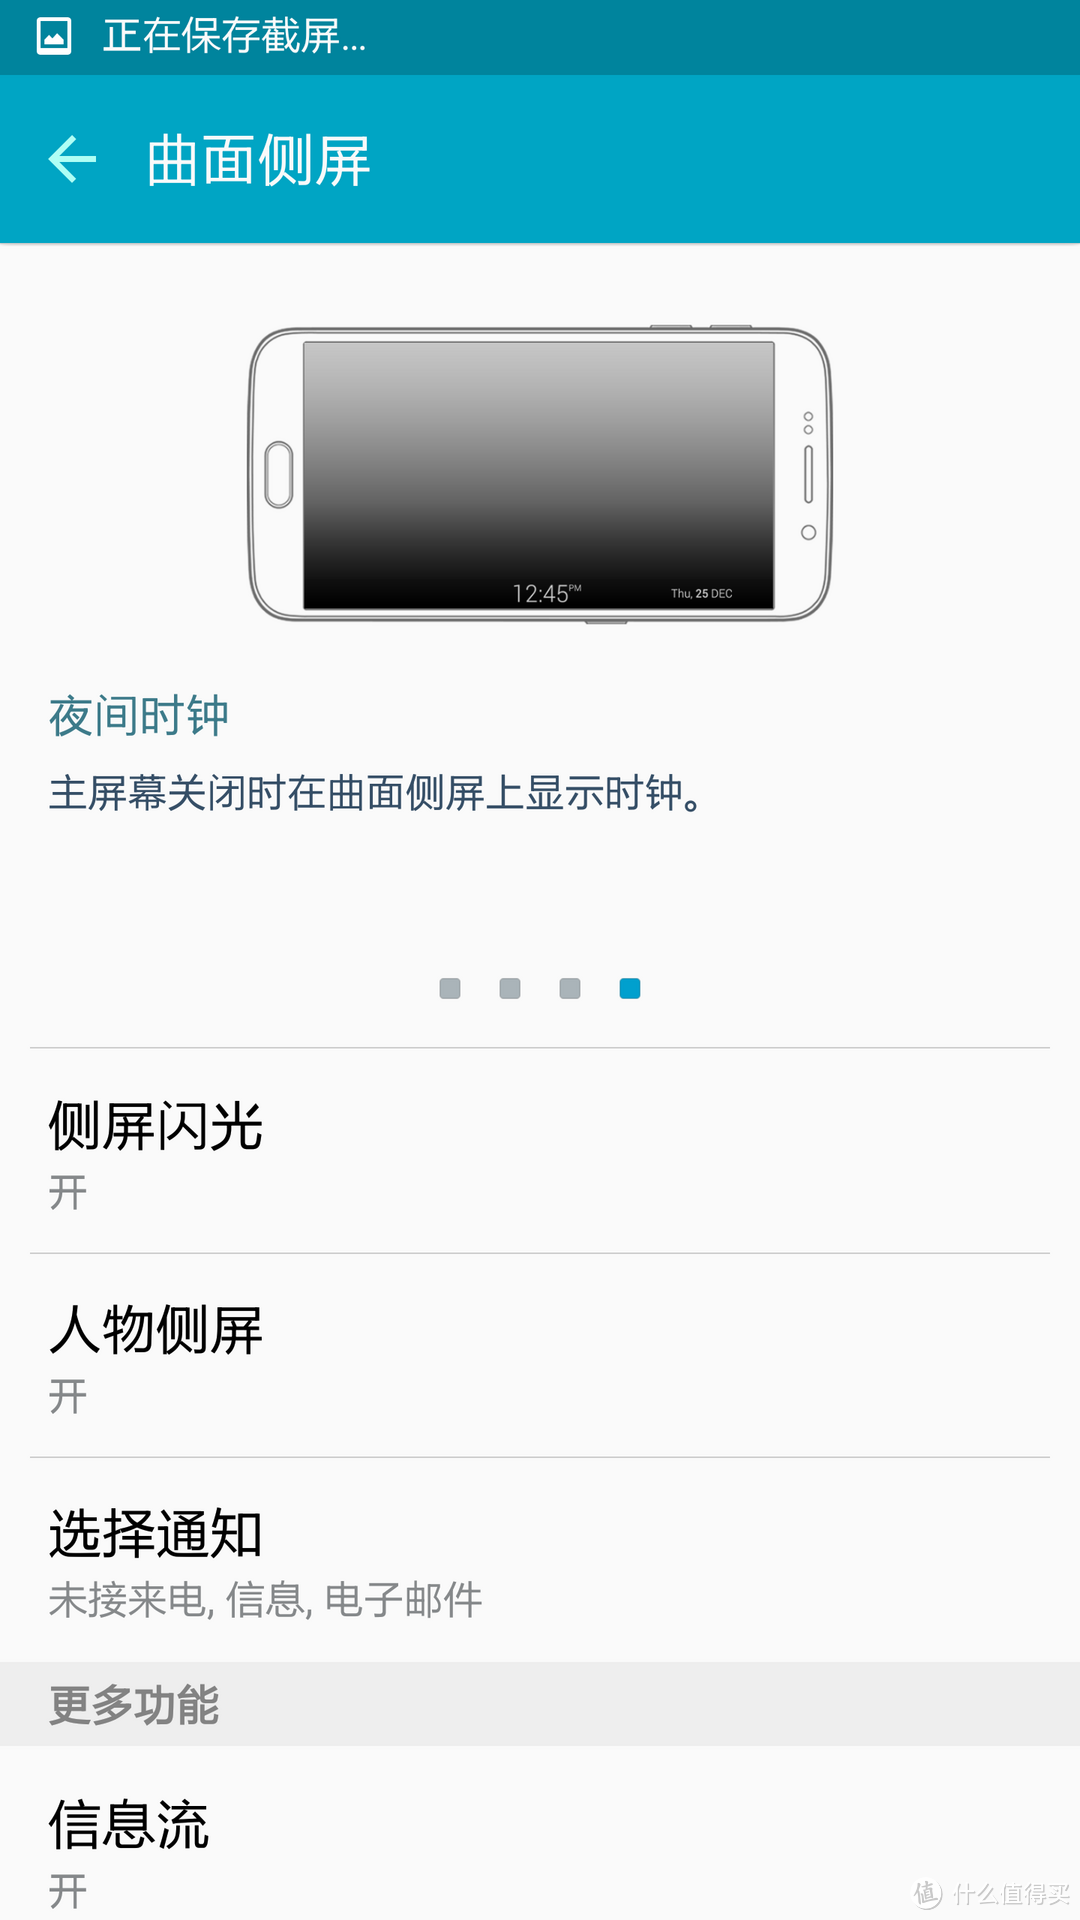 Samsung 三星 Galaxy S6 Edge 简单开箱